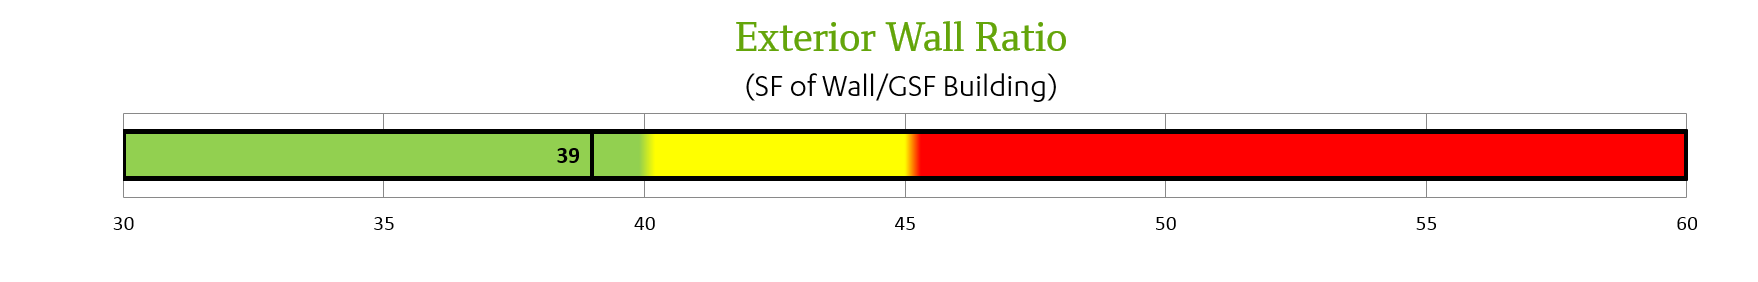 Exterior Wall Ratio